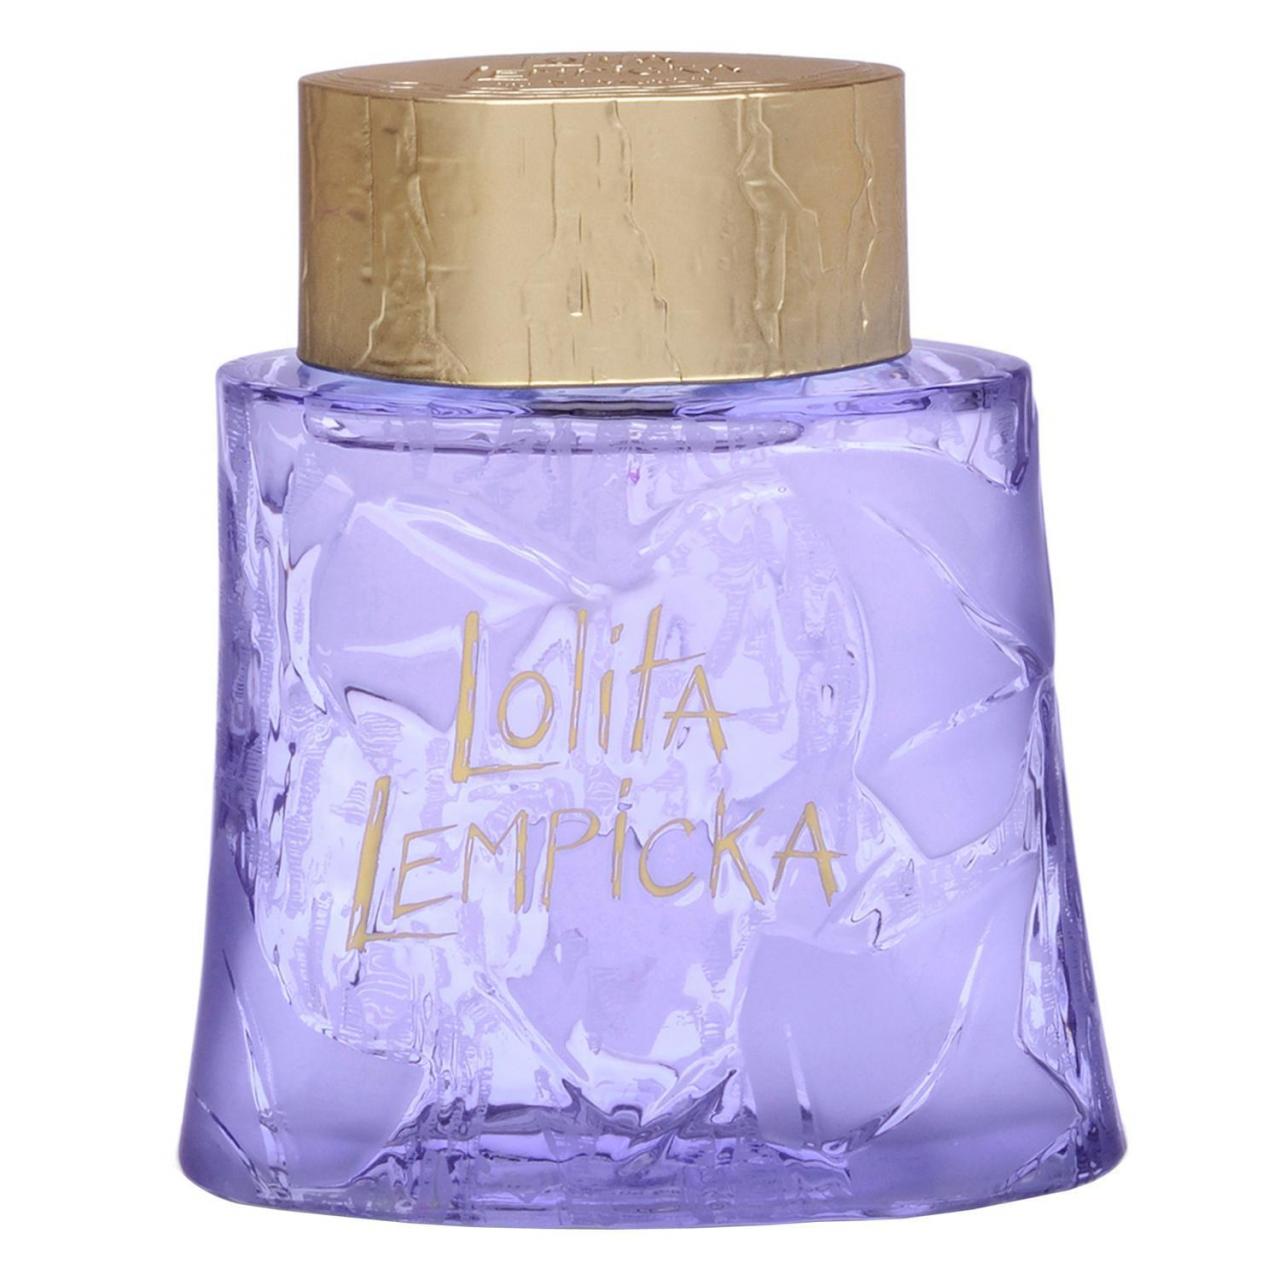 Nước Hoa Lolita Lempicka Au Masculin EDT 100ml hương thơm cam thảo